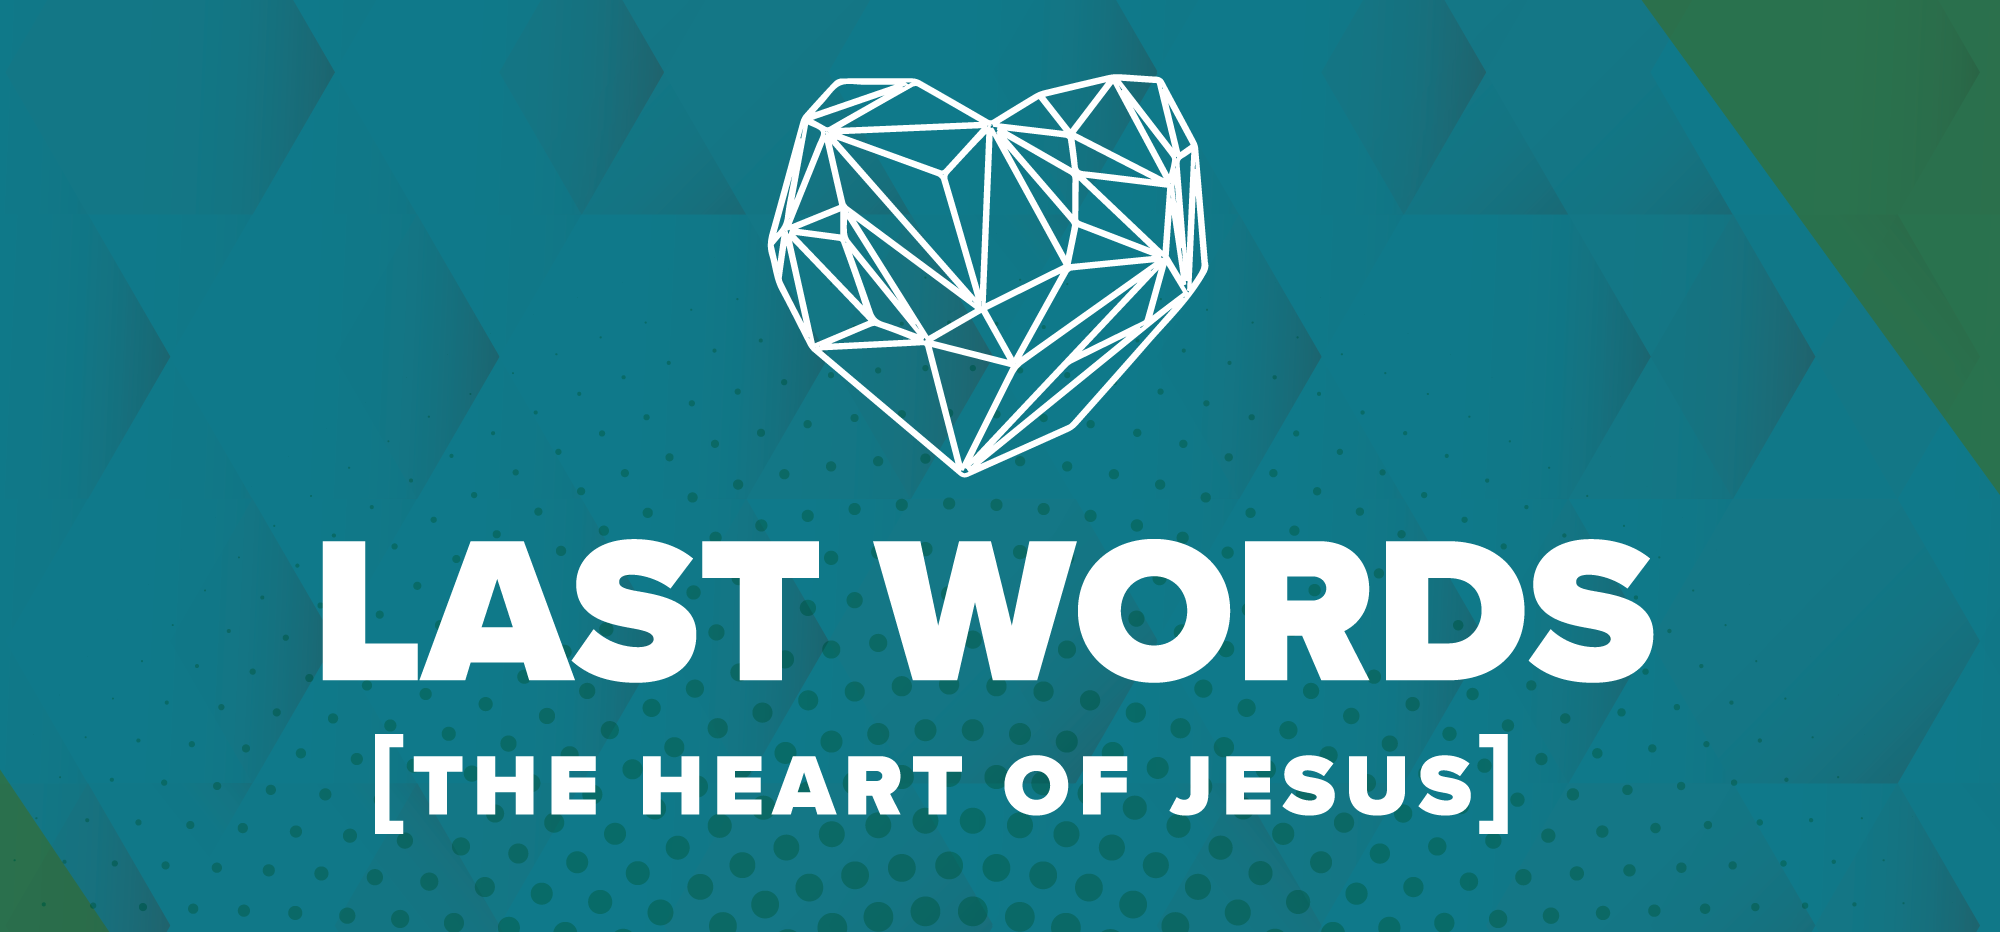 Fall 2022 Chapel Header image: Last Words The Heart of Jesus